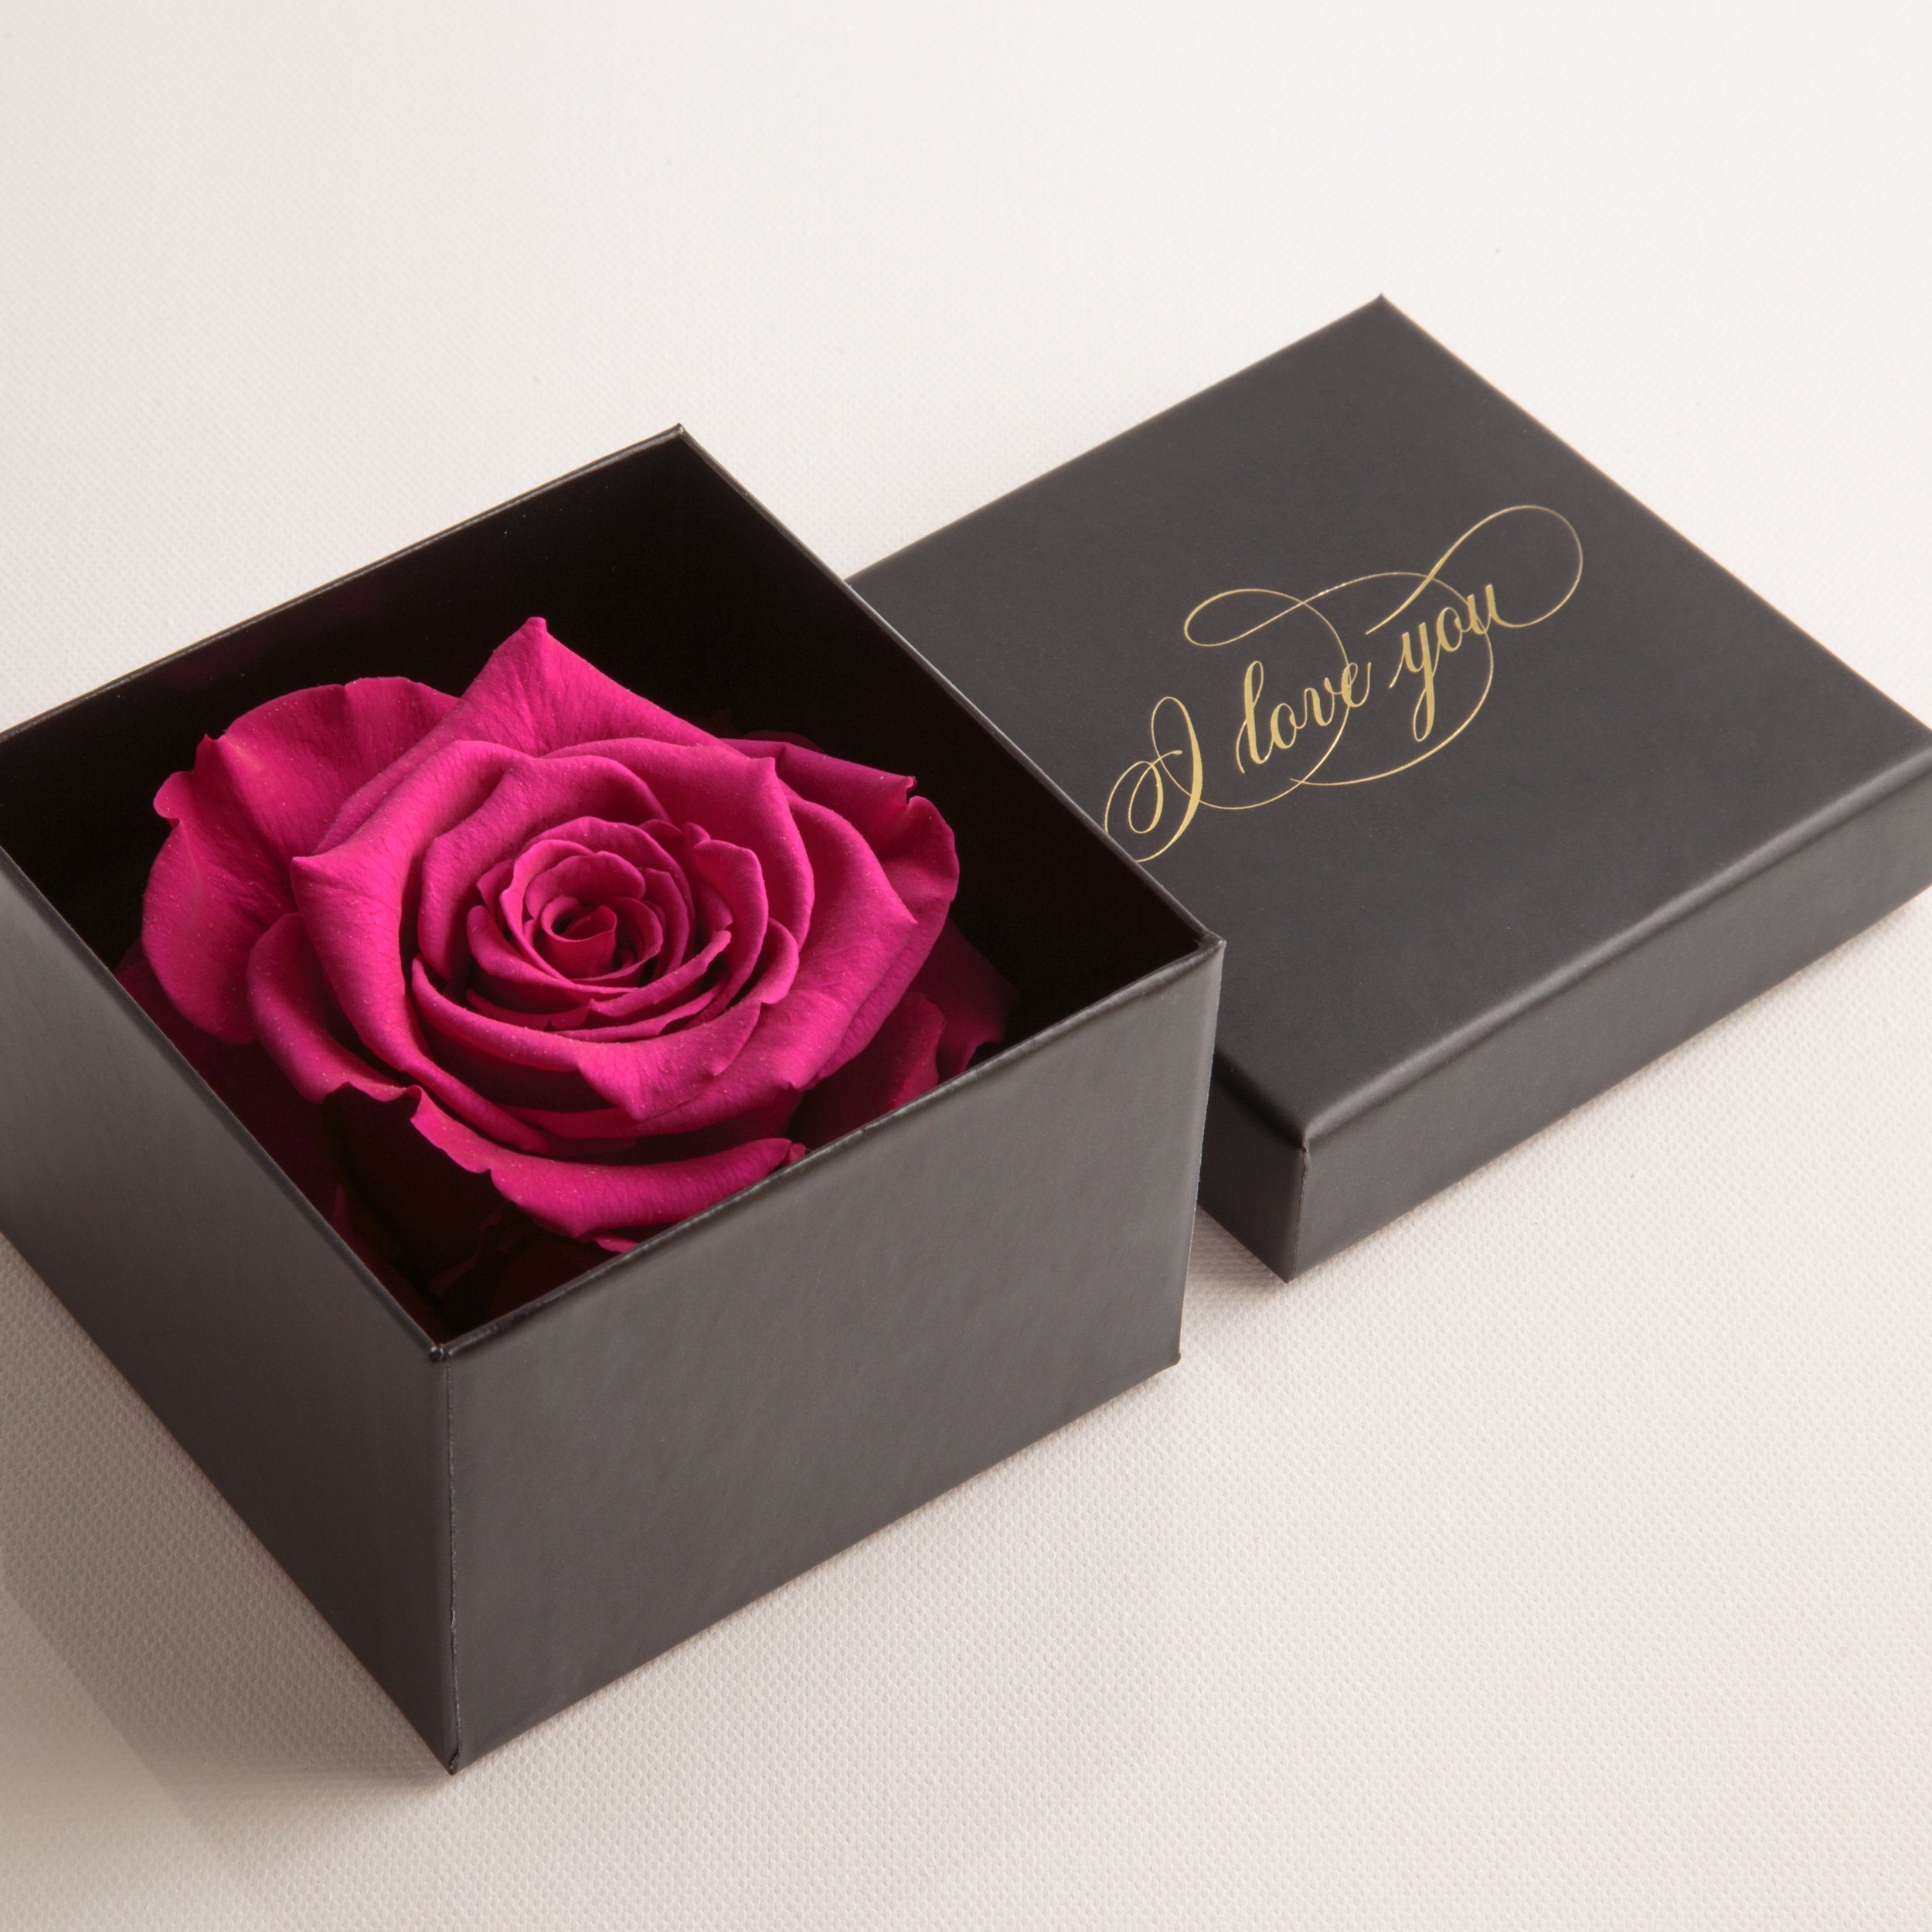 Liebesbeweis Geschenk 6 konserviert Echte Pink You I Heidelberg, Box Love Rose SCHULZ Idee Rose Rose, Infinity Höhe Kunstblume cm, ROSEMARIE